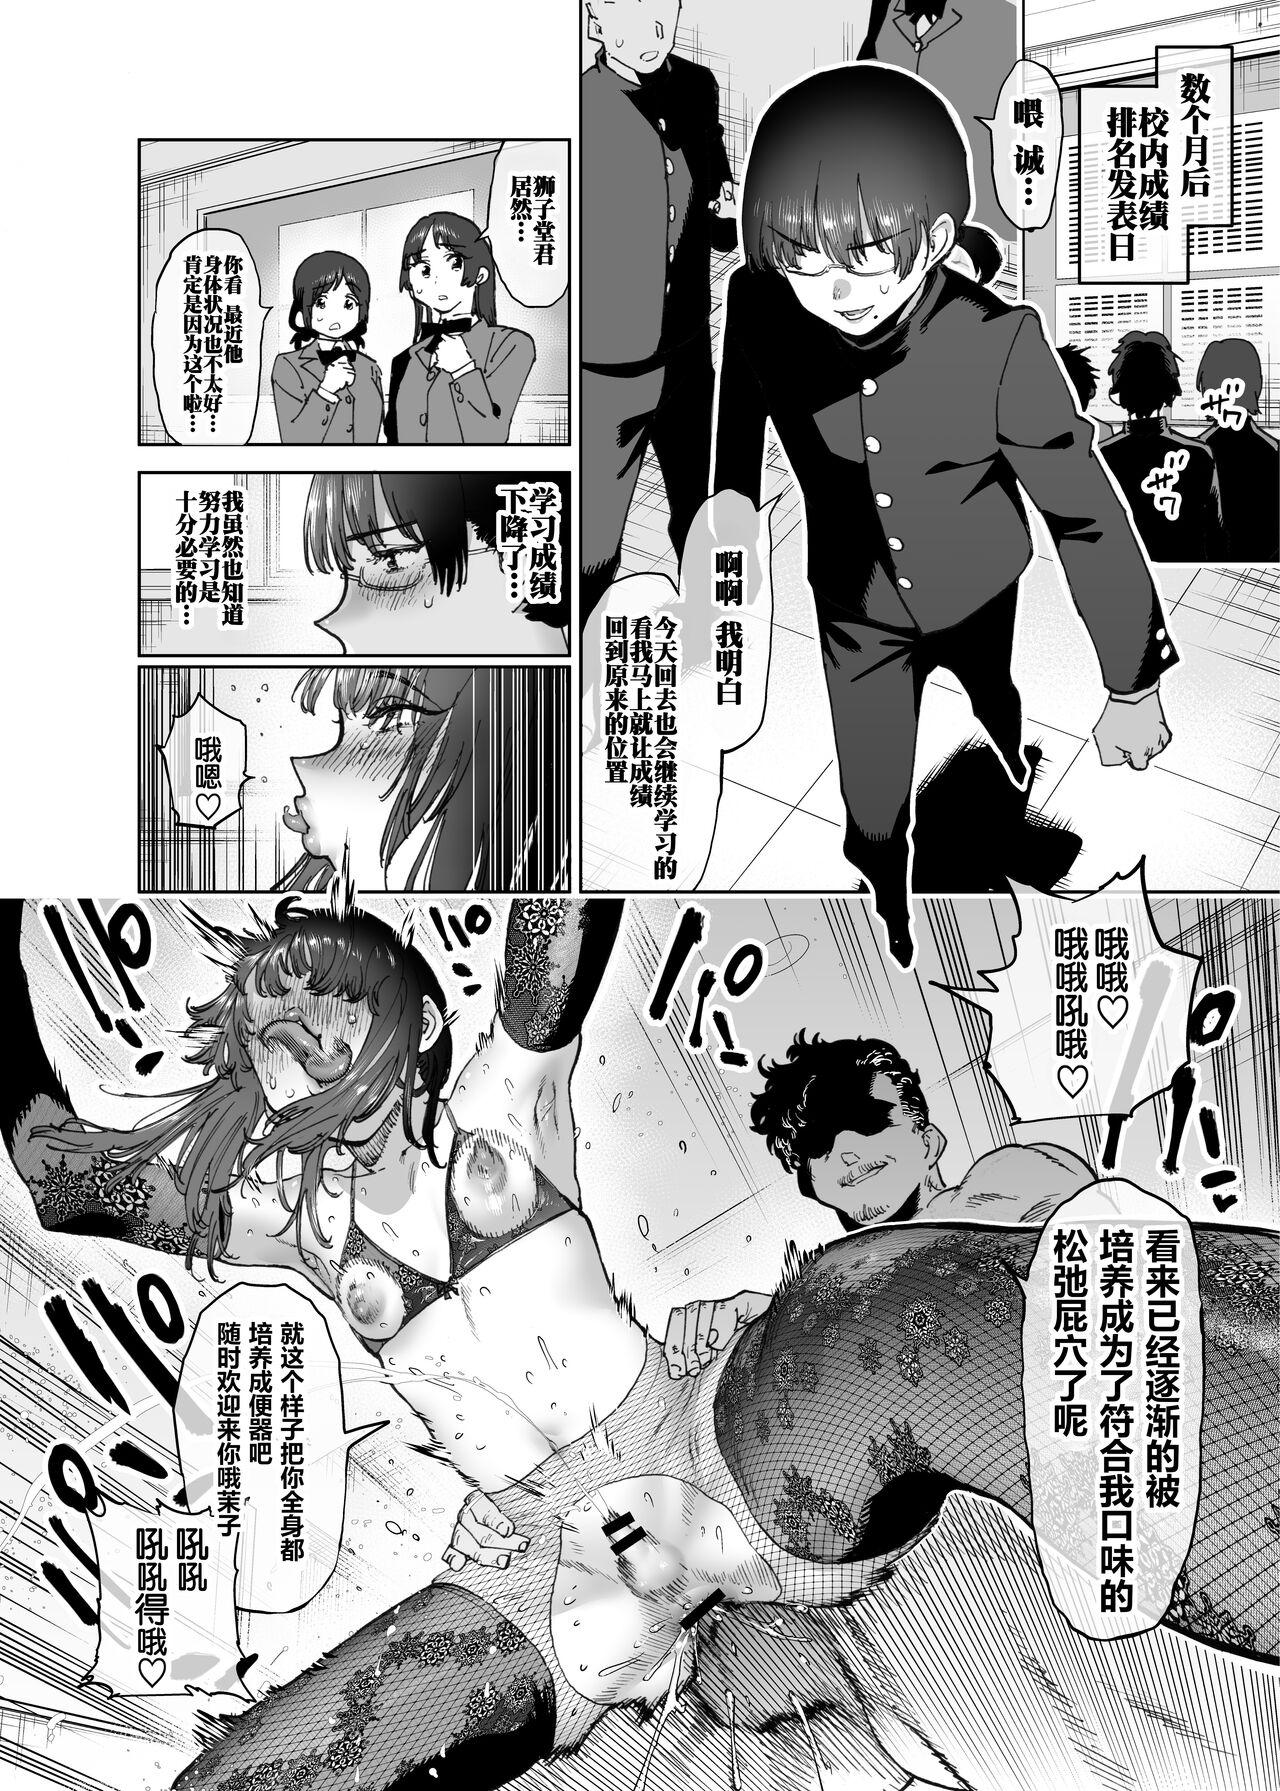 Rabo Let's imitate together! Shishido-kun's future plans Club - Page 10